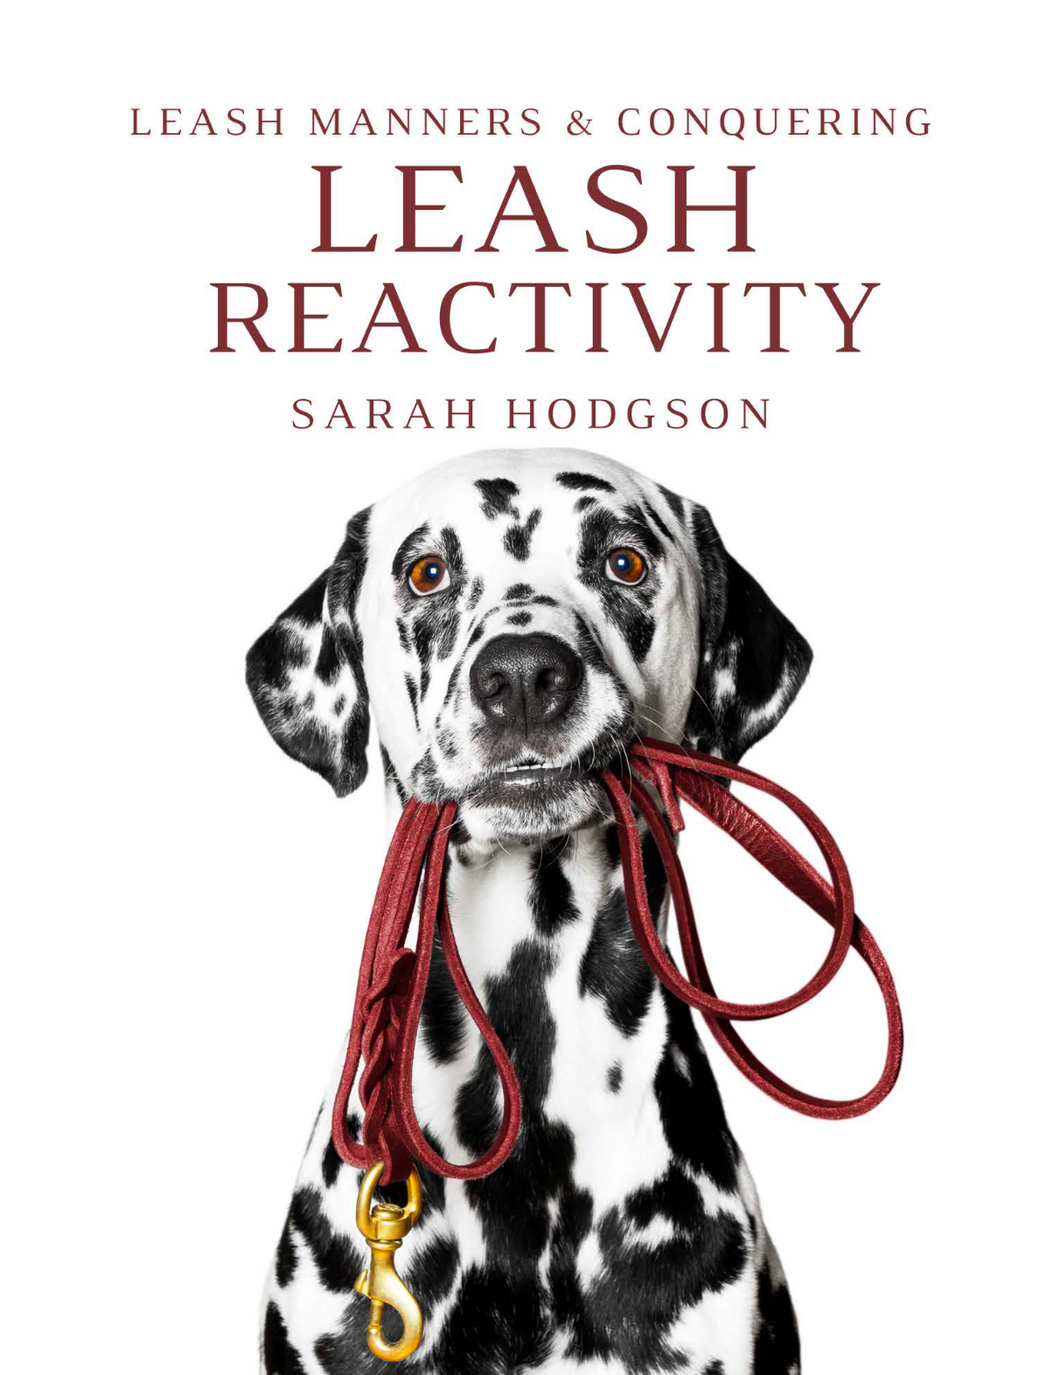 Leash Manners & Conquering Leash Reactivity Ebook